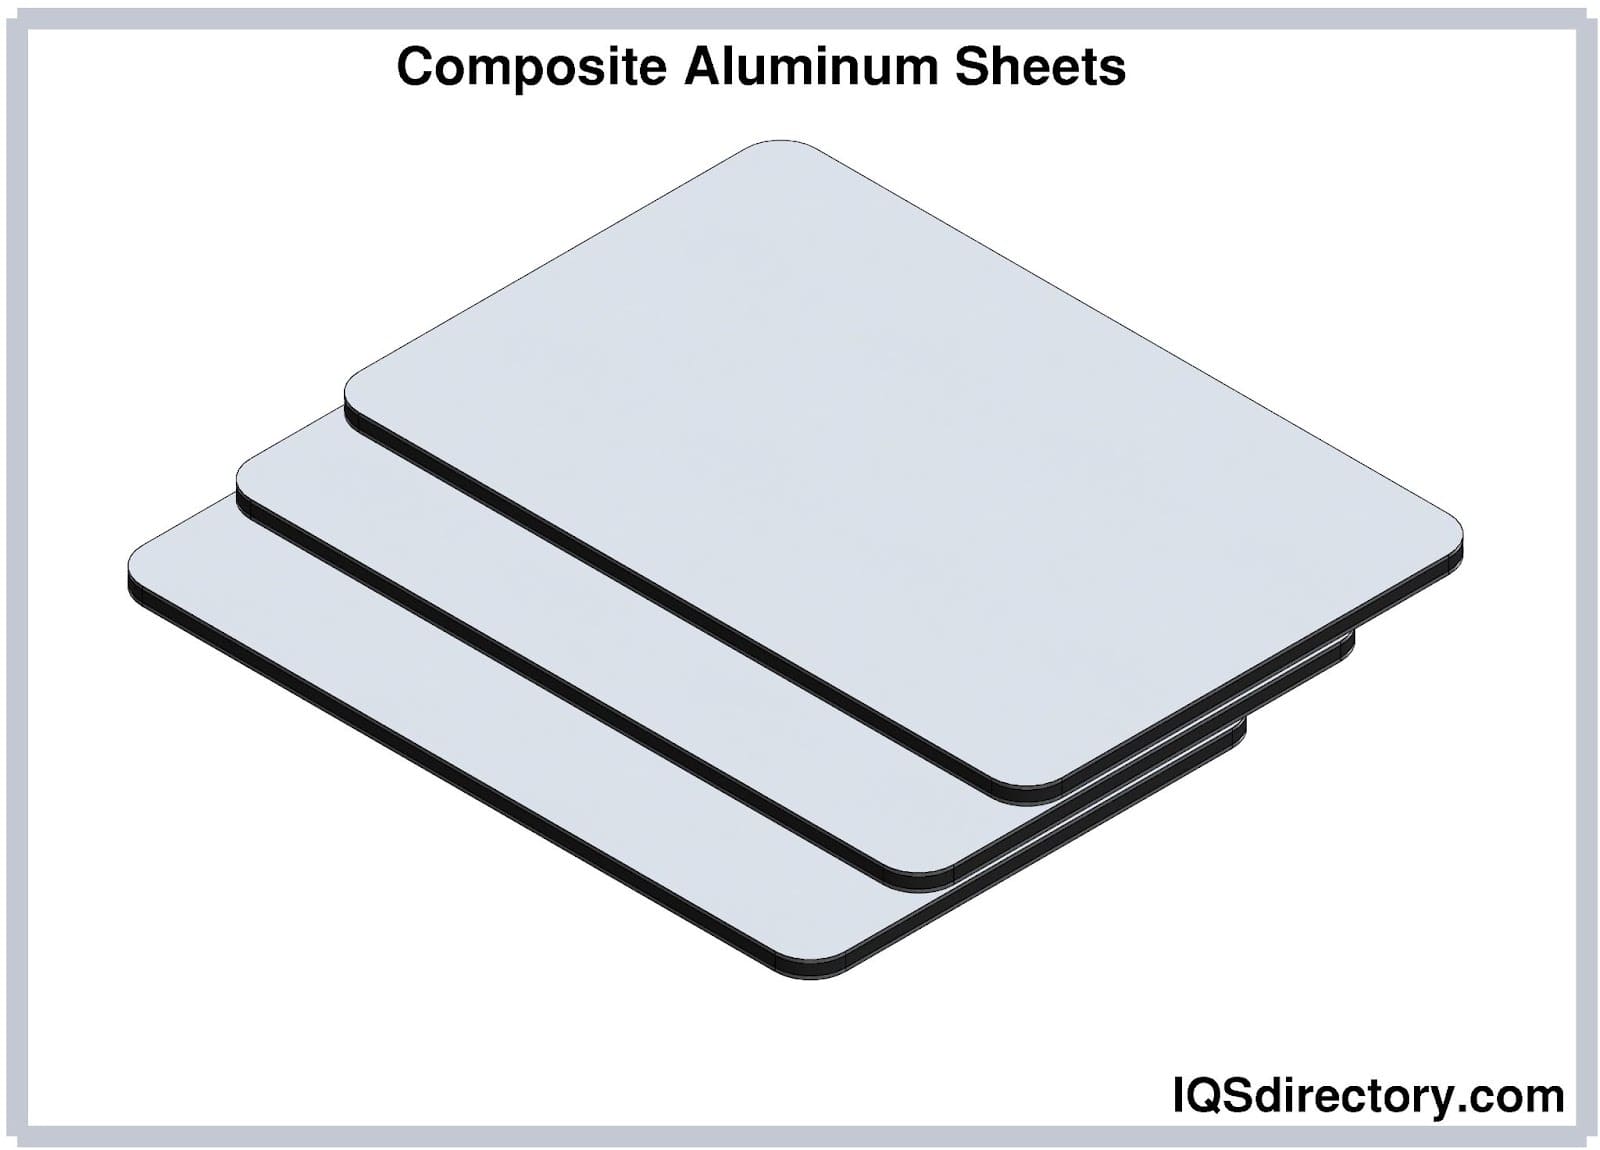 Composite Aluminum Sheets